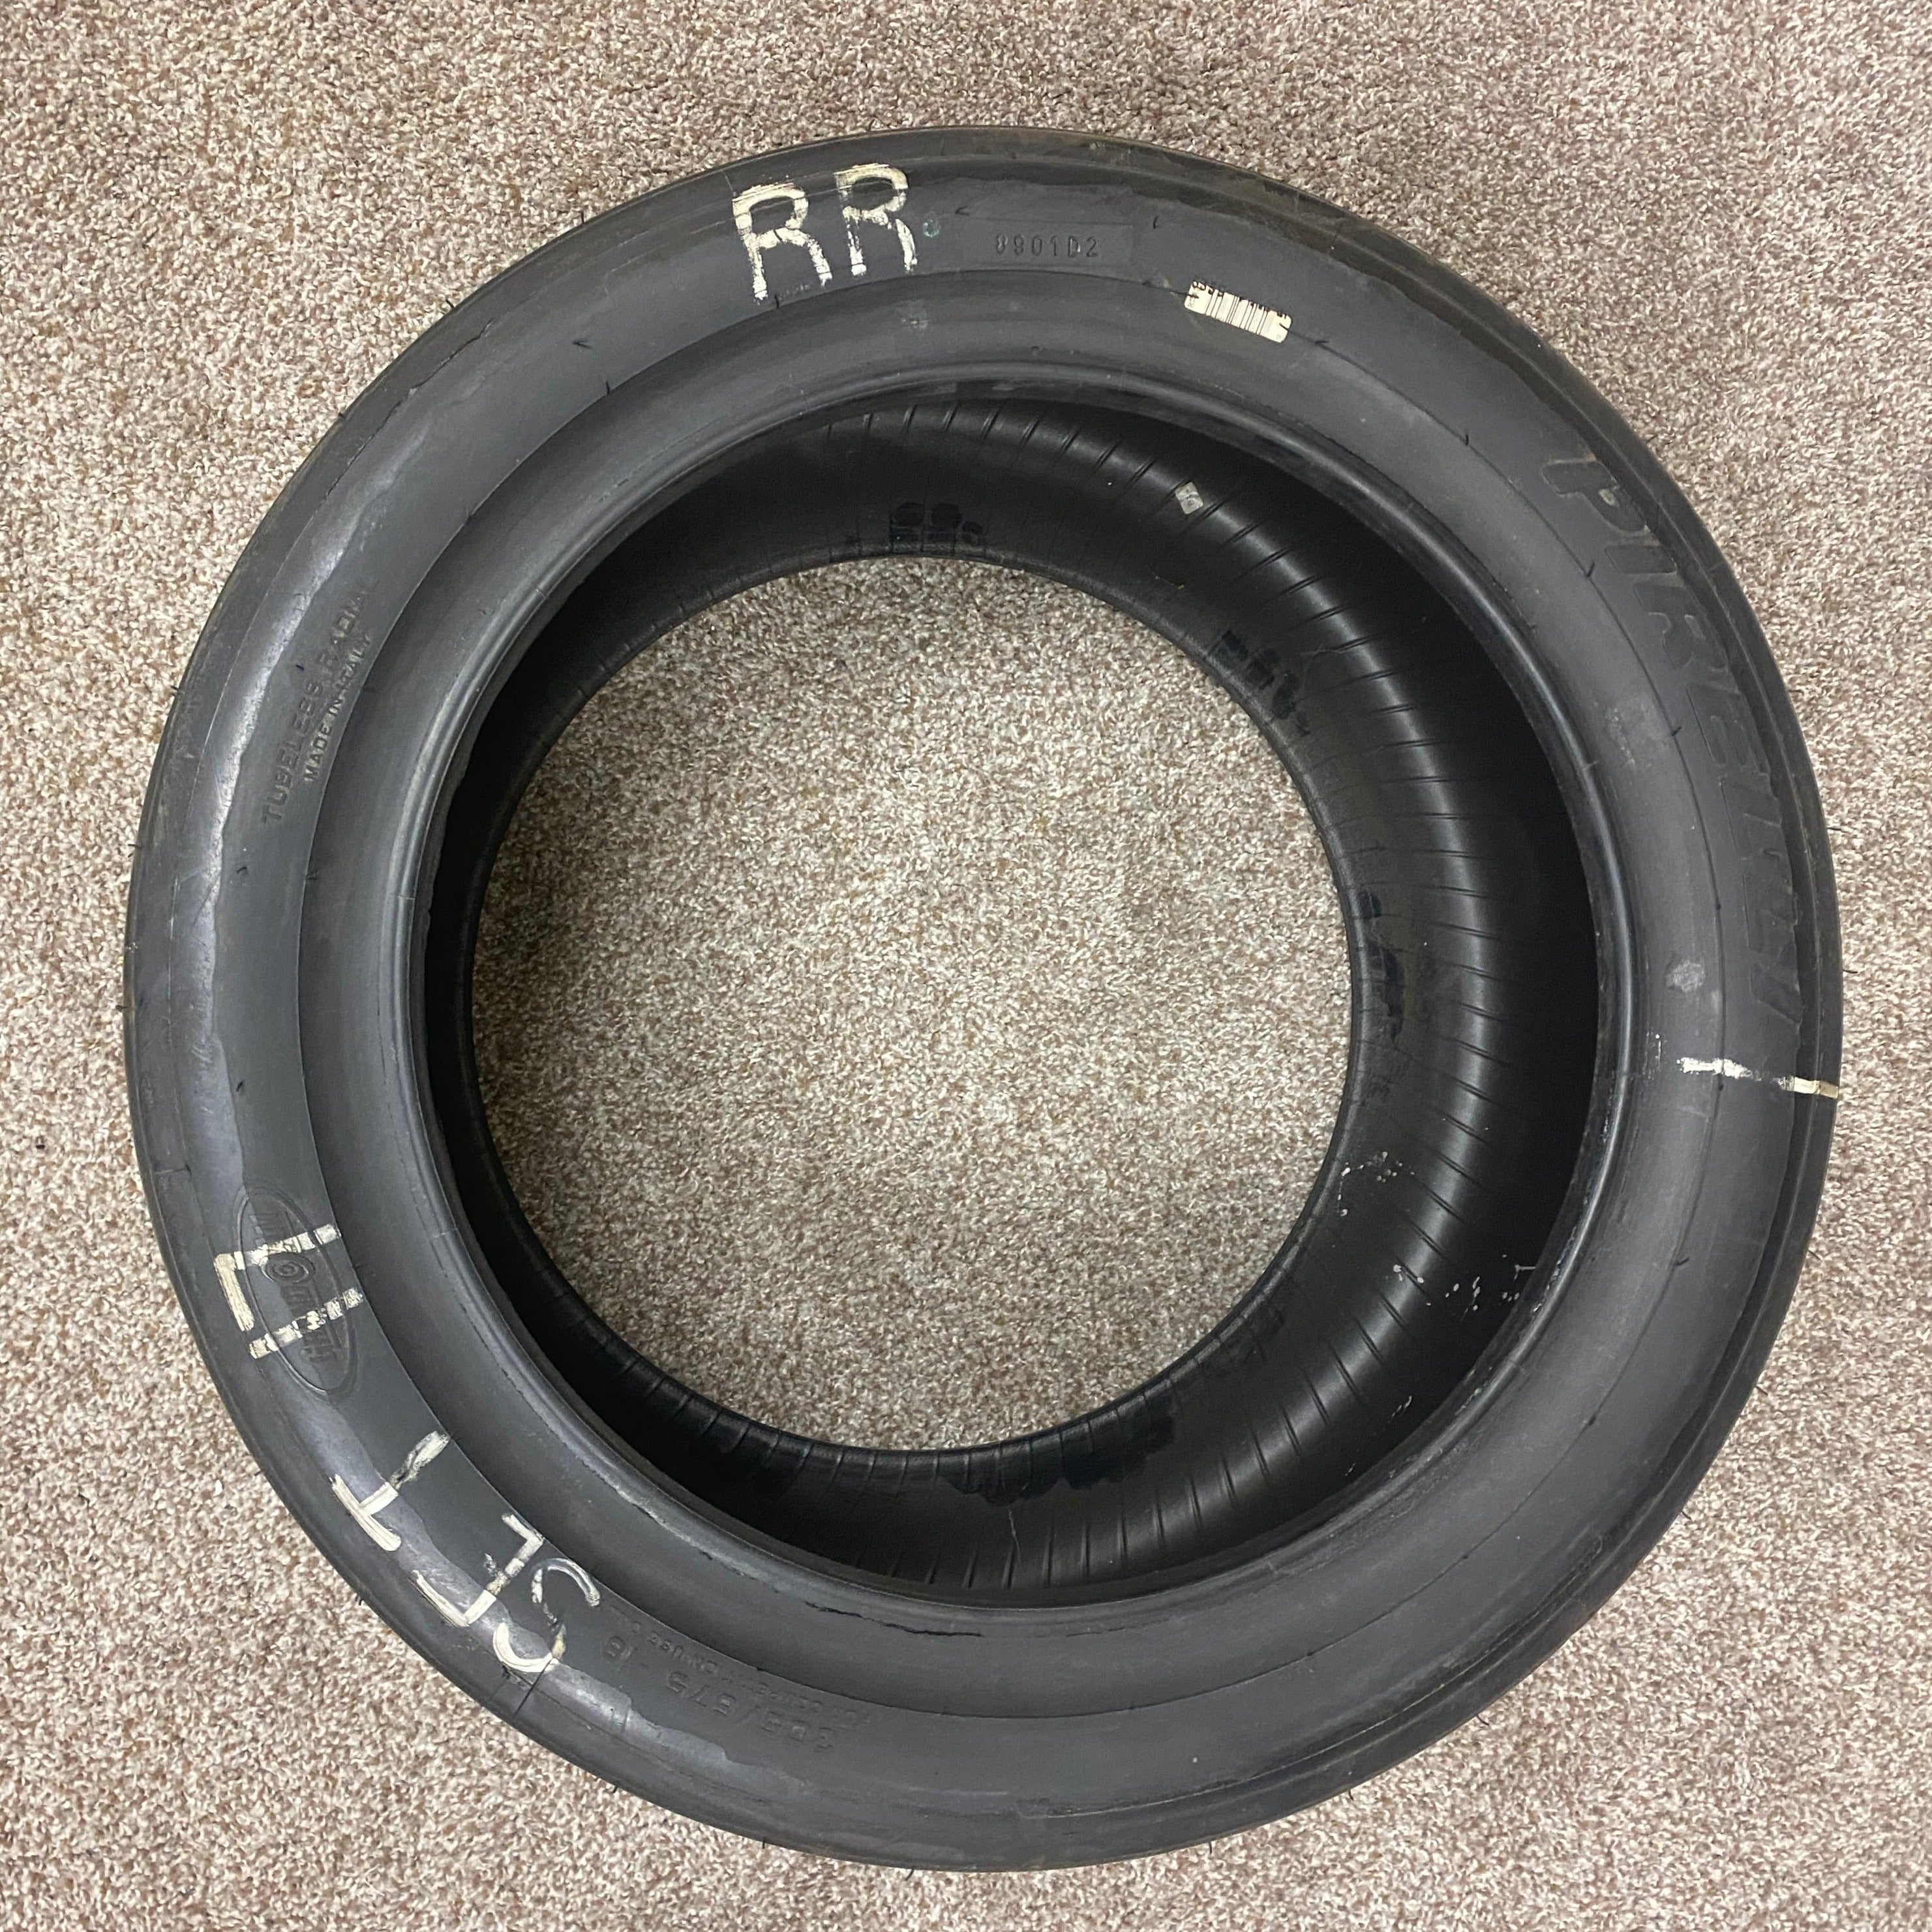 Pirelli Grand Am 305/675/18 Rear Racing Slick Tire